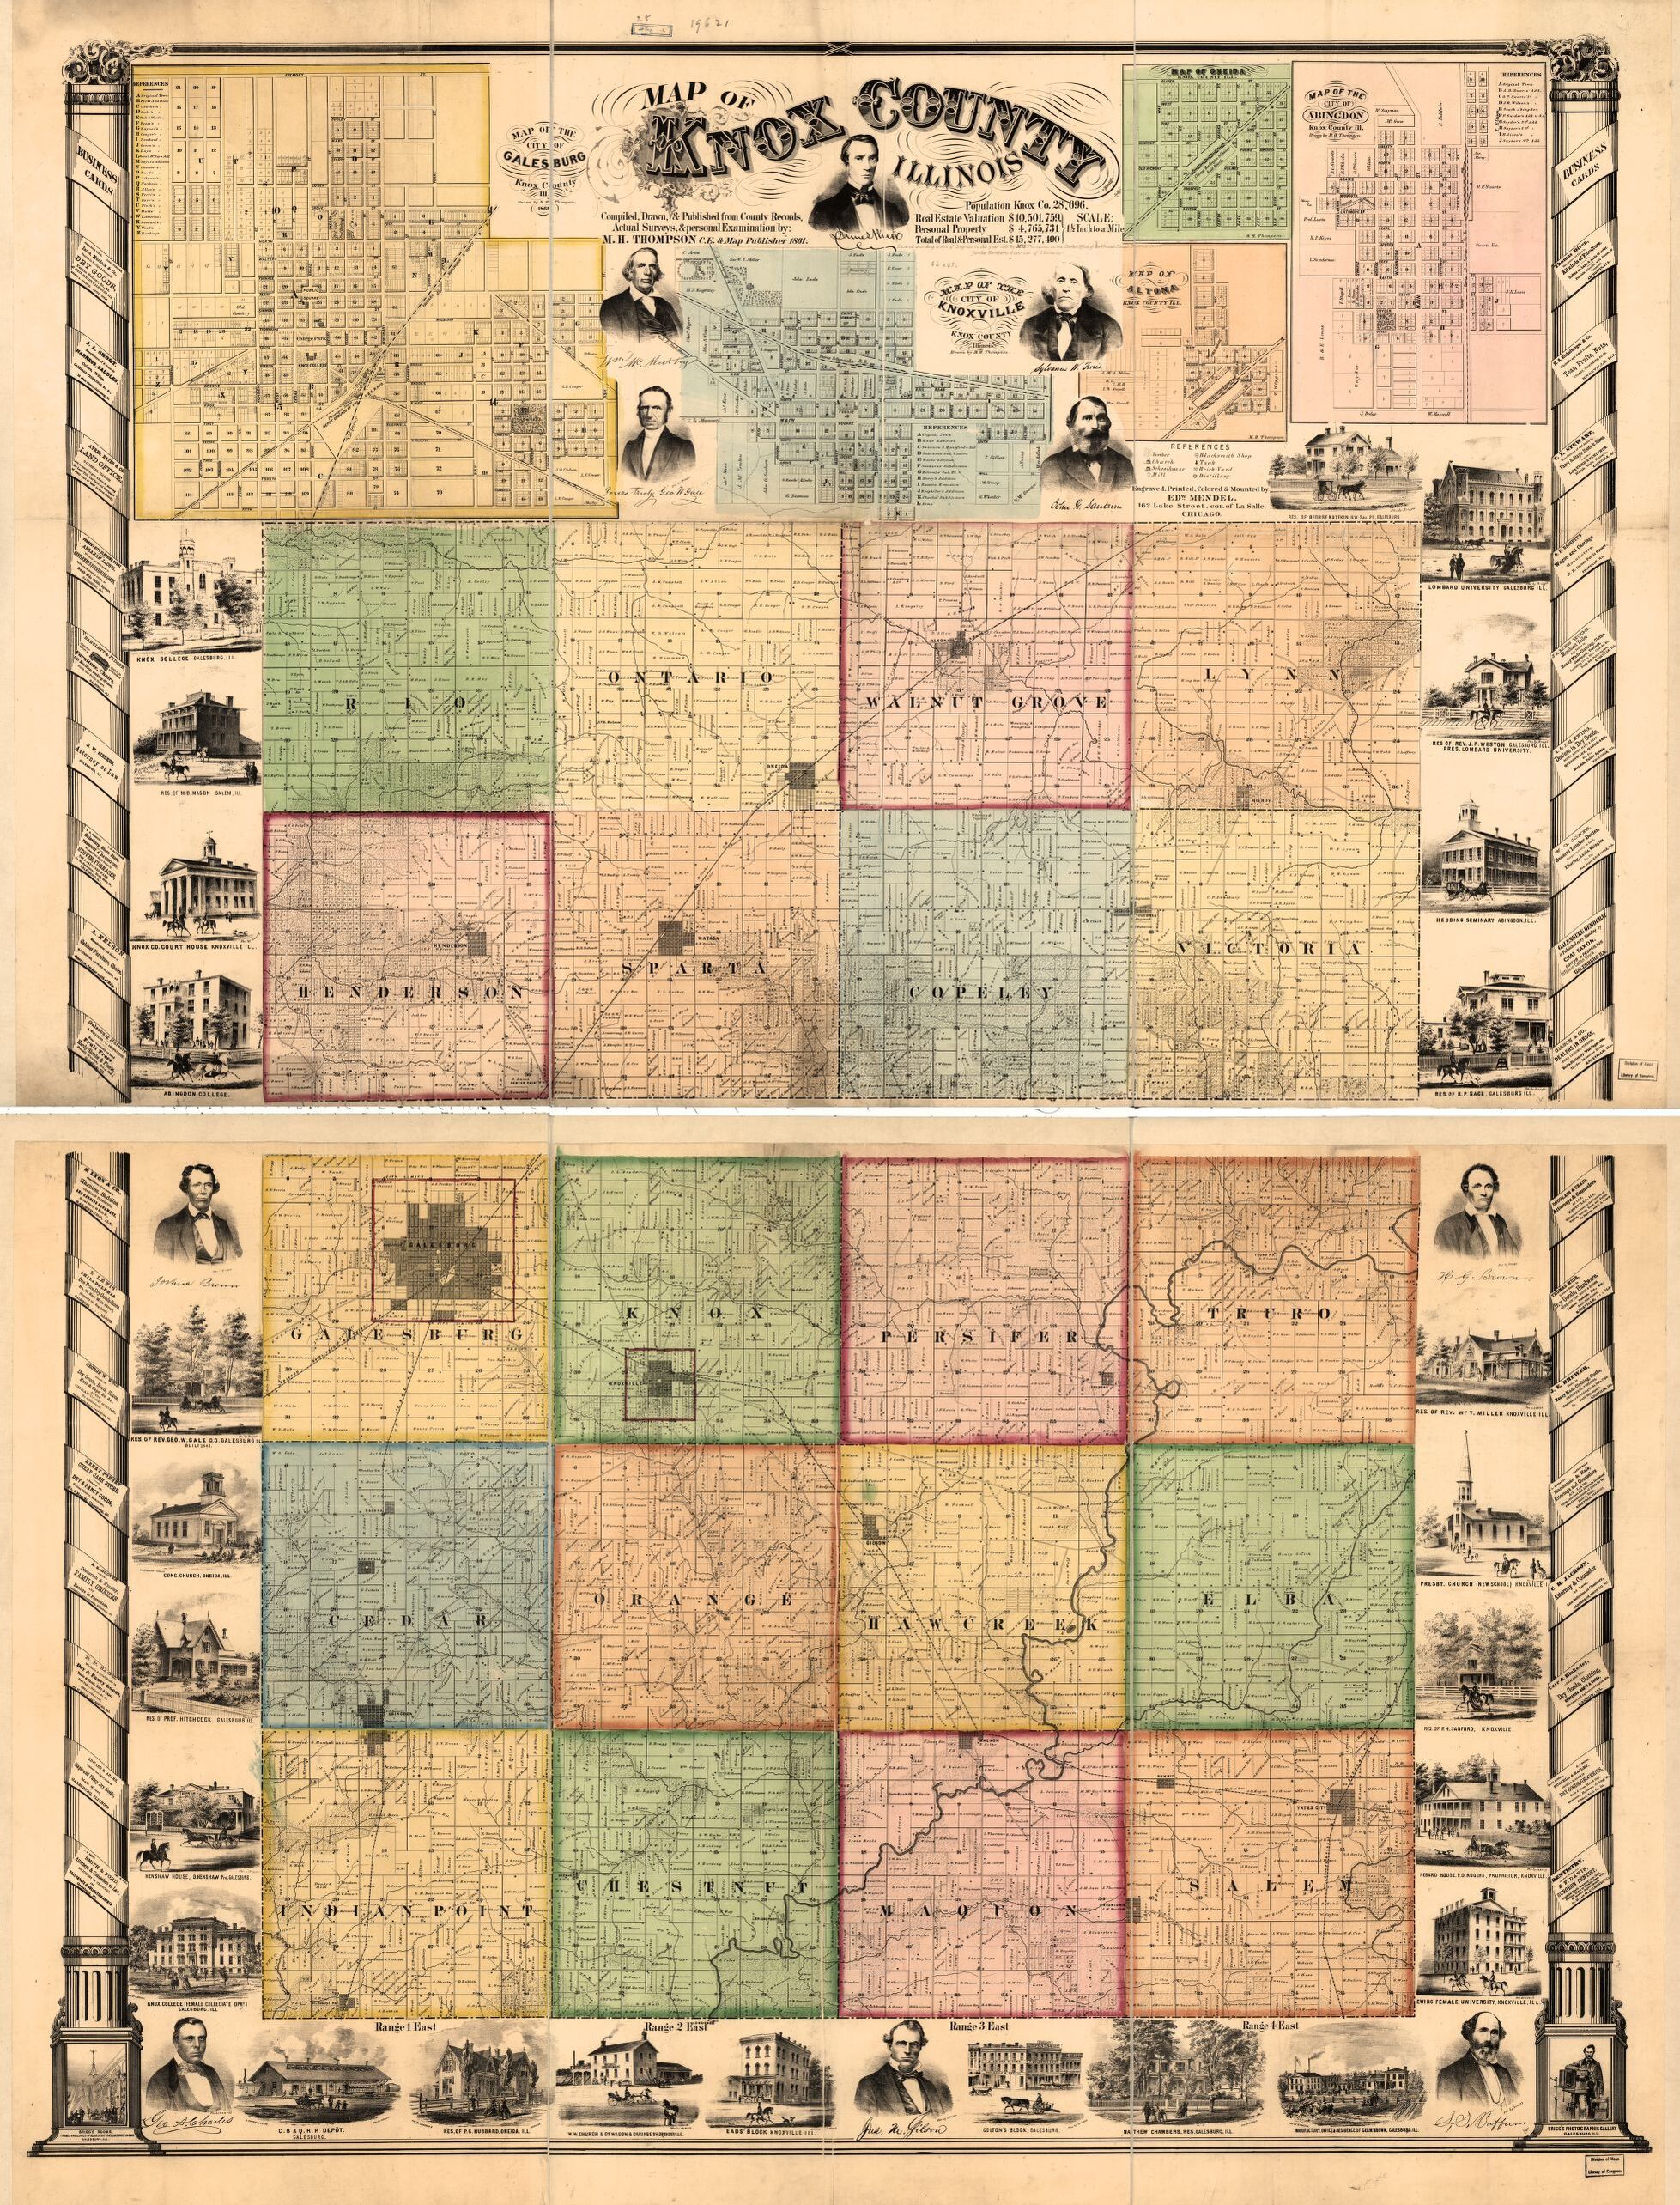 Knox County, Illinois - Map - 1861 (Publisher: Thompson)